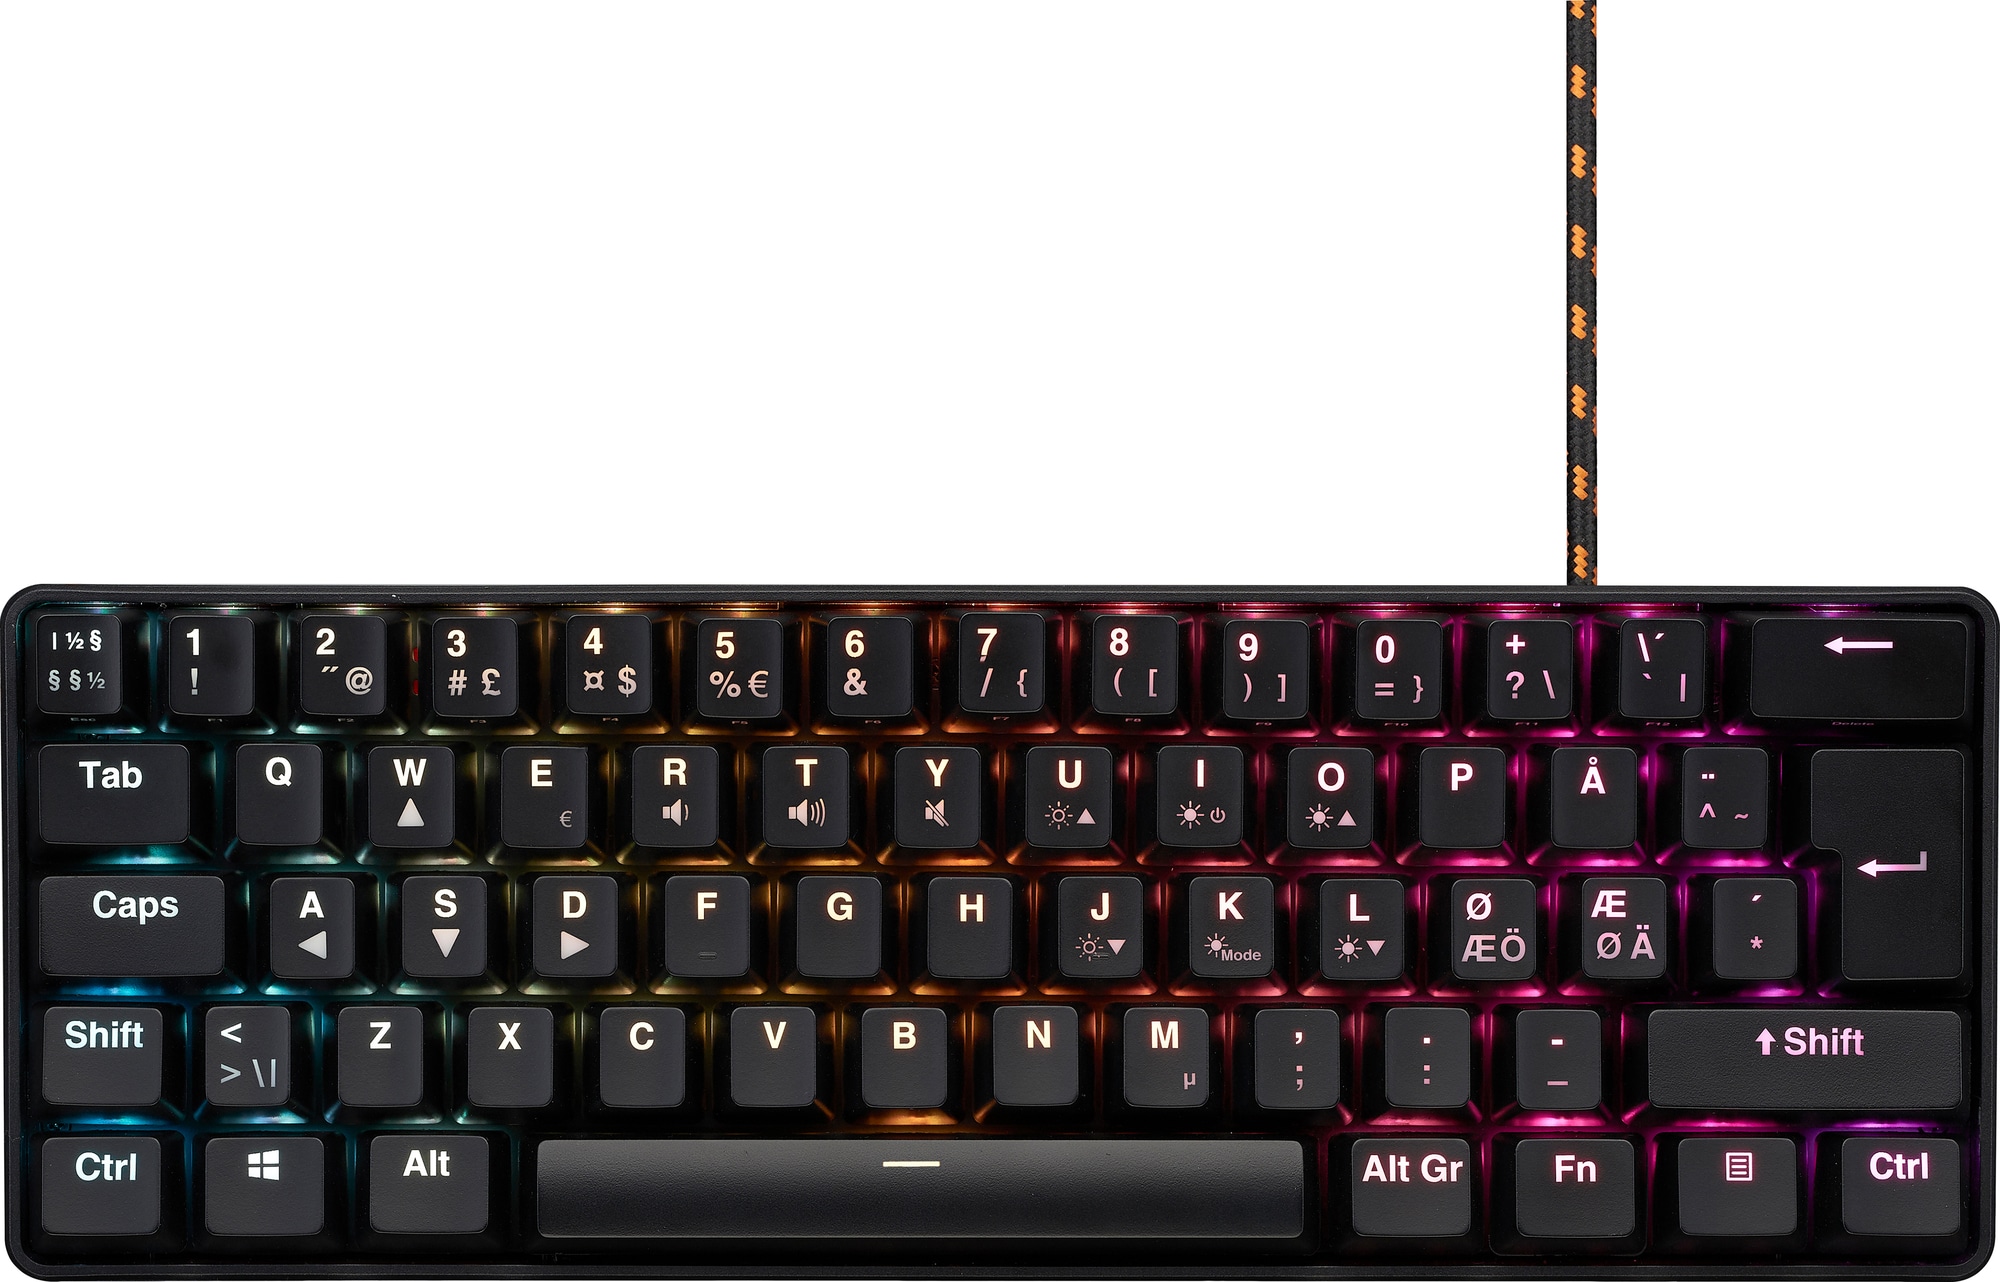 ADX kompakt RGB mekanisk gaming tastatur - Mus og tastatur ...